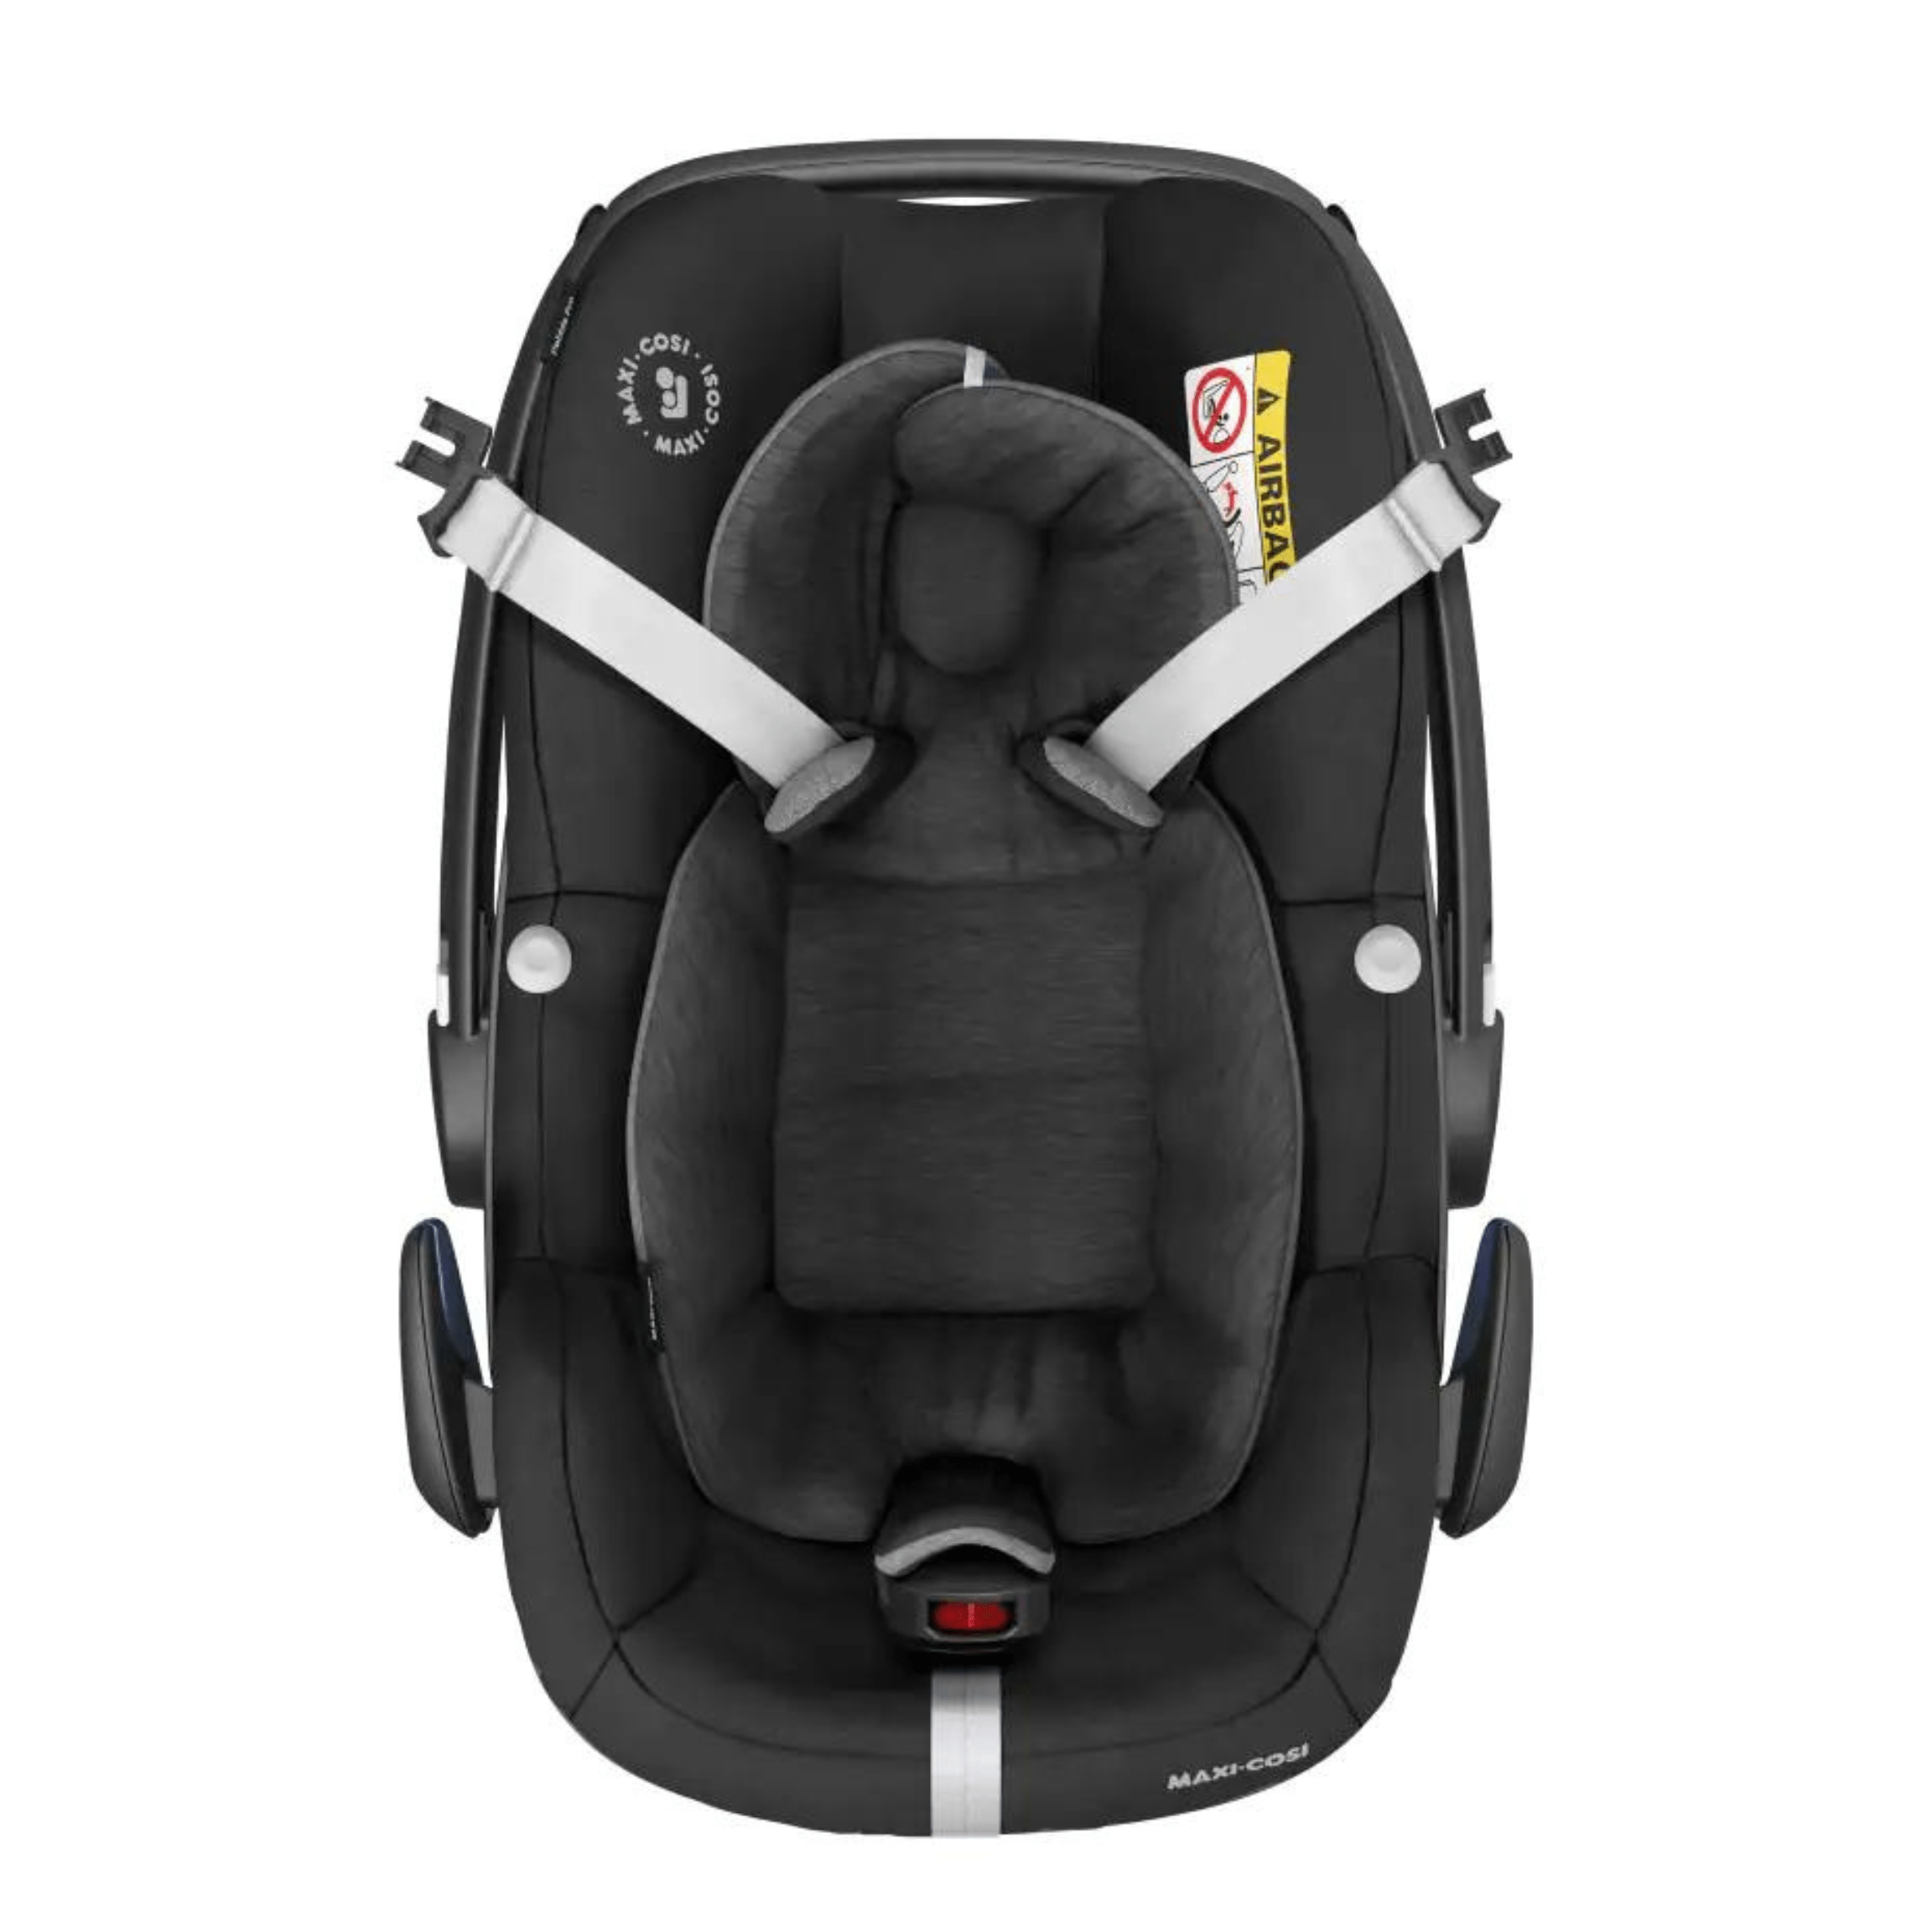 Maxi-Cosi Pebble Pro i-Size Essential Black Baby Car Seats 8799672300 8712930155317